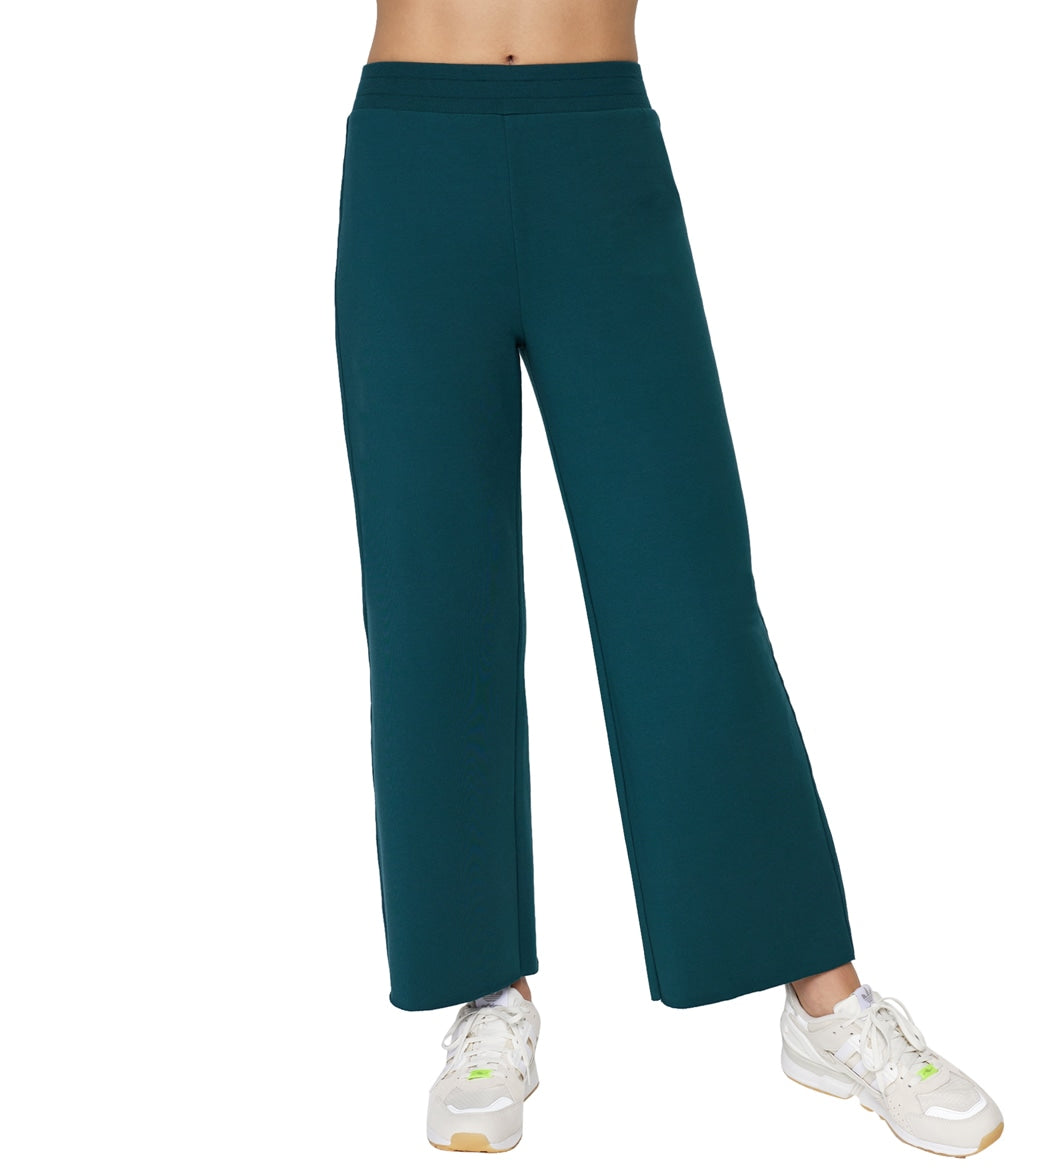 LEEy-World Sweatpants Women Women's Pants Casual High Waist Skinny Leggings  Stretchy Work Pants Green,M